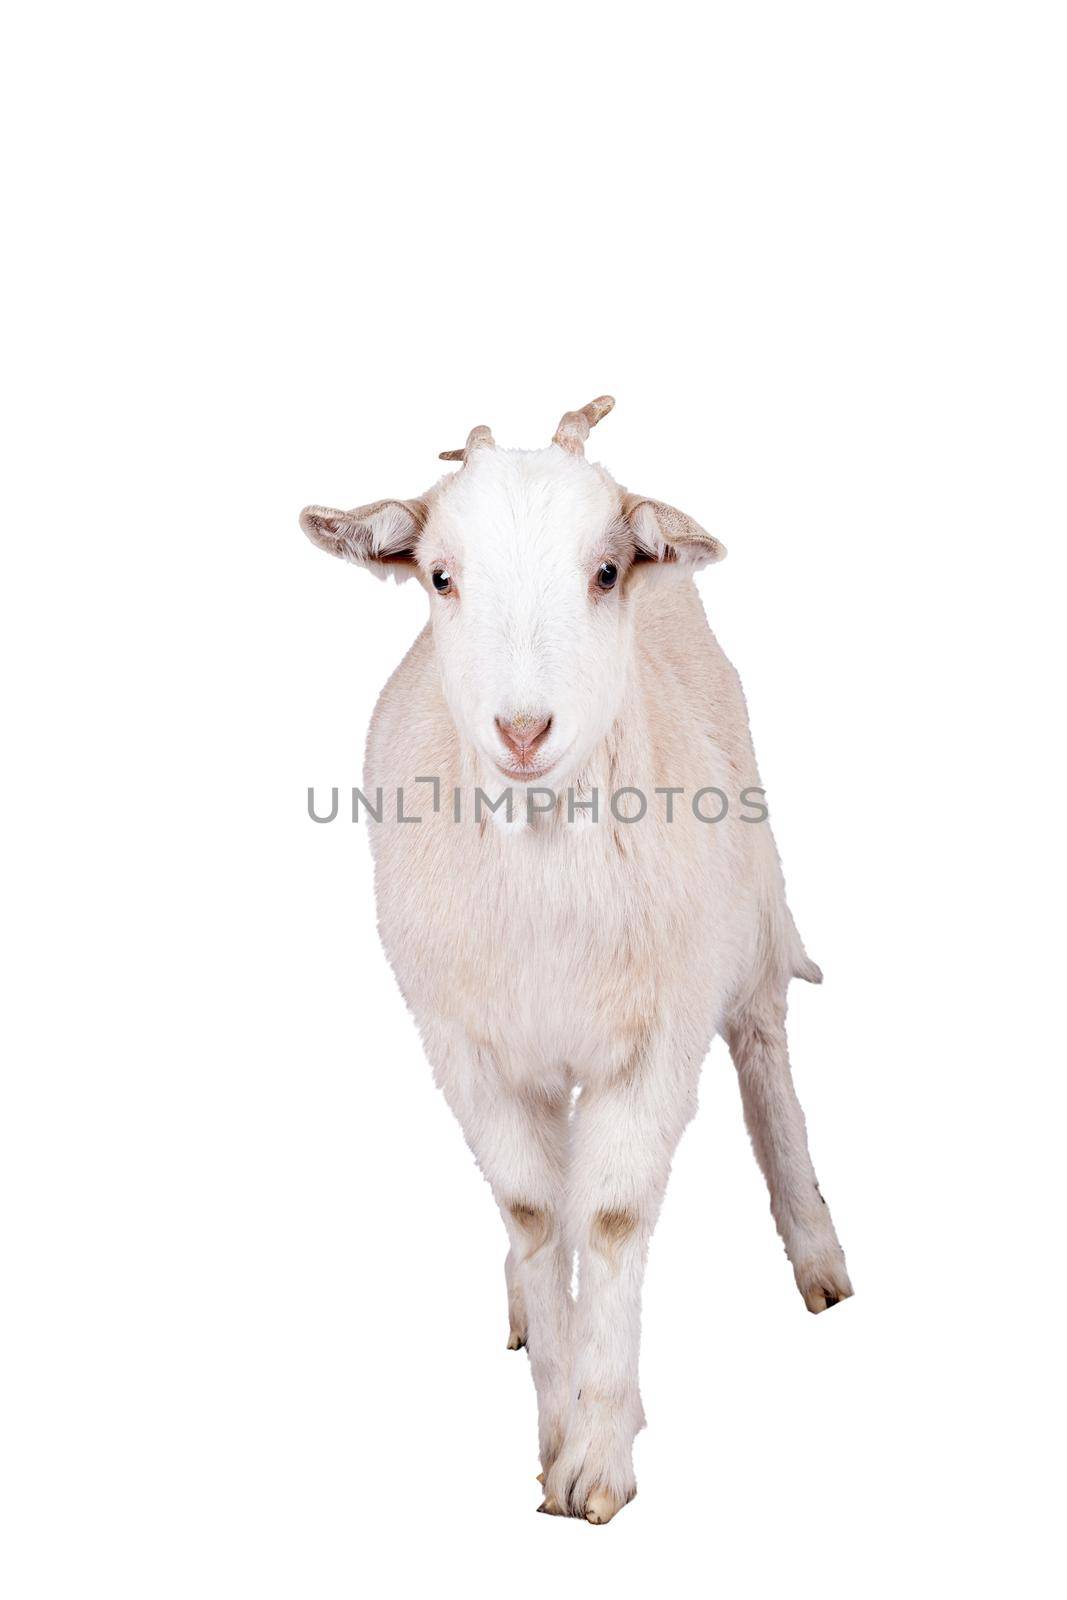 Beautiful white goat isolated on white background by RosaJay